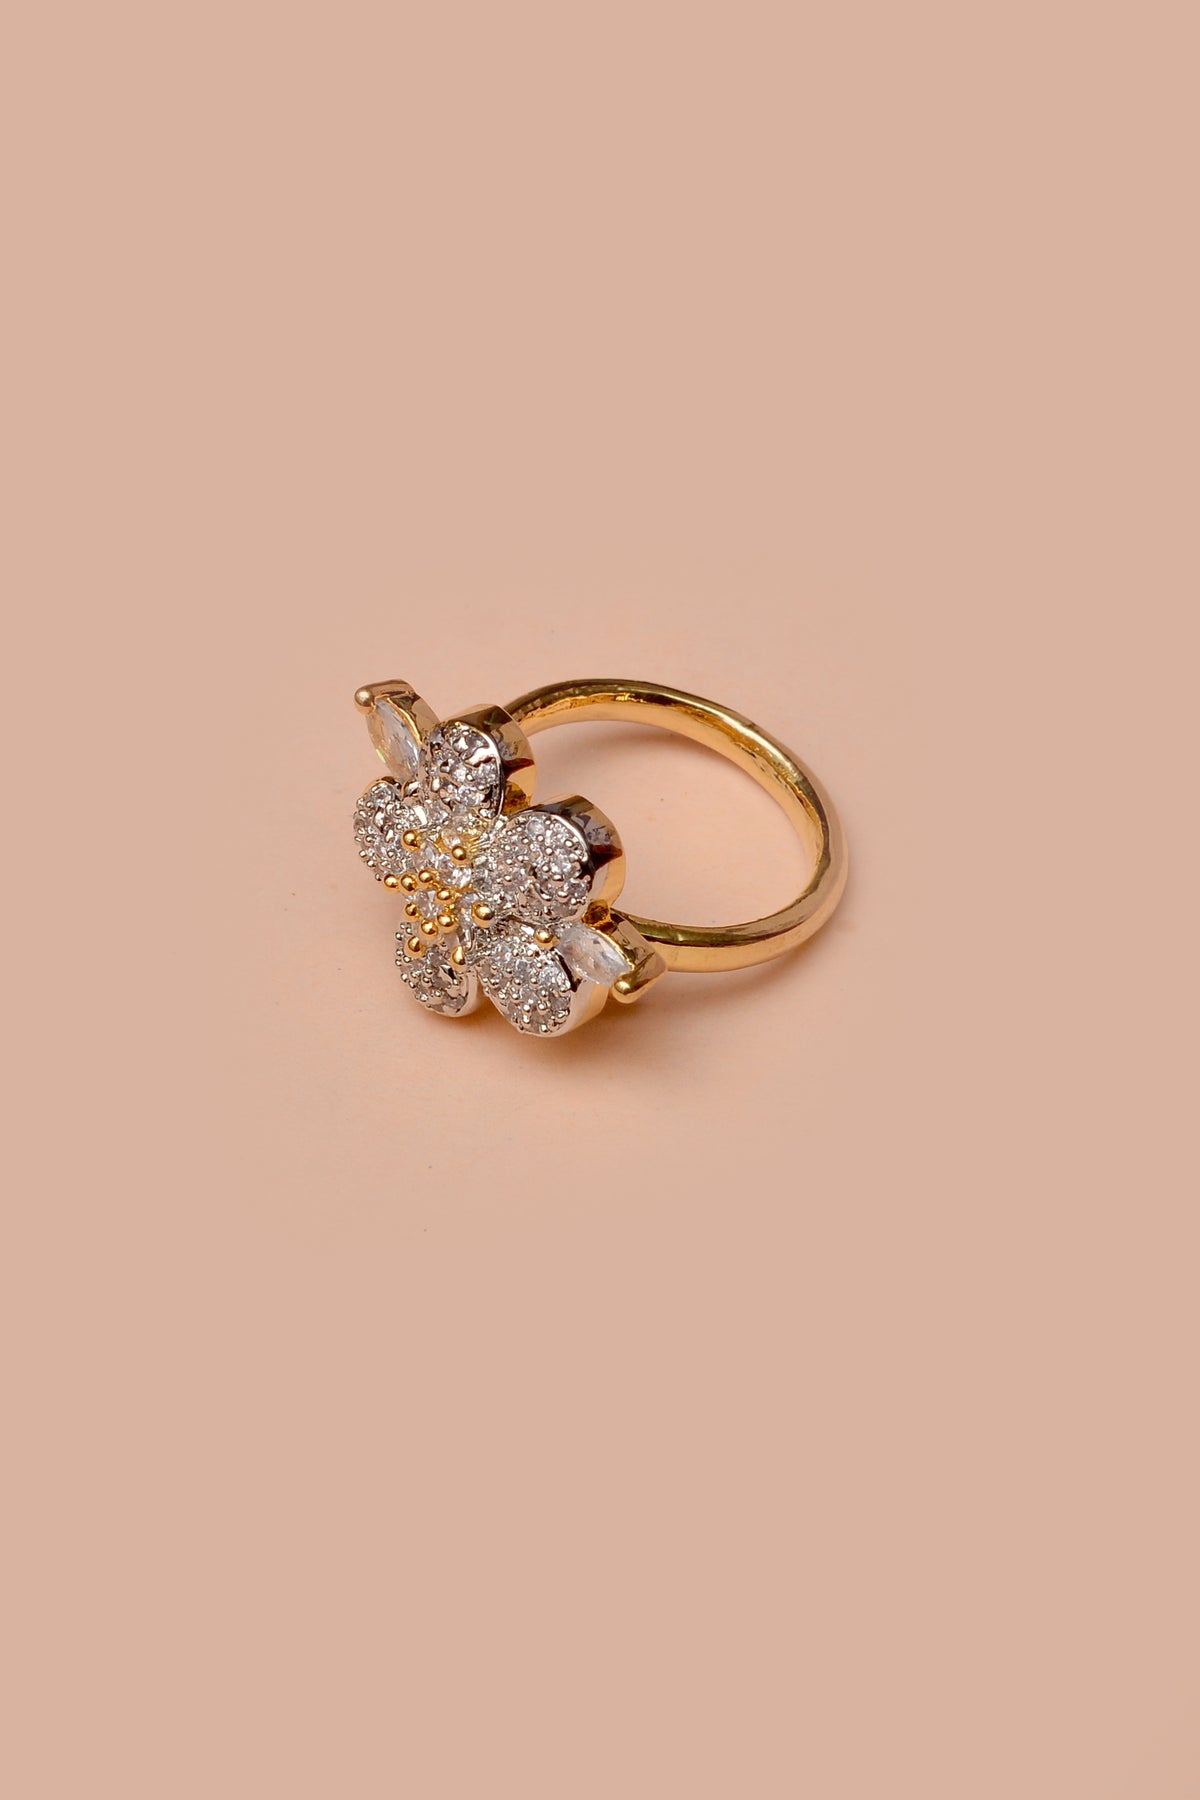 Size 0 Engagement & Wedding Champagne Ring